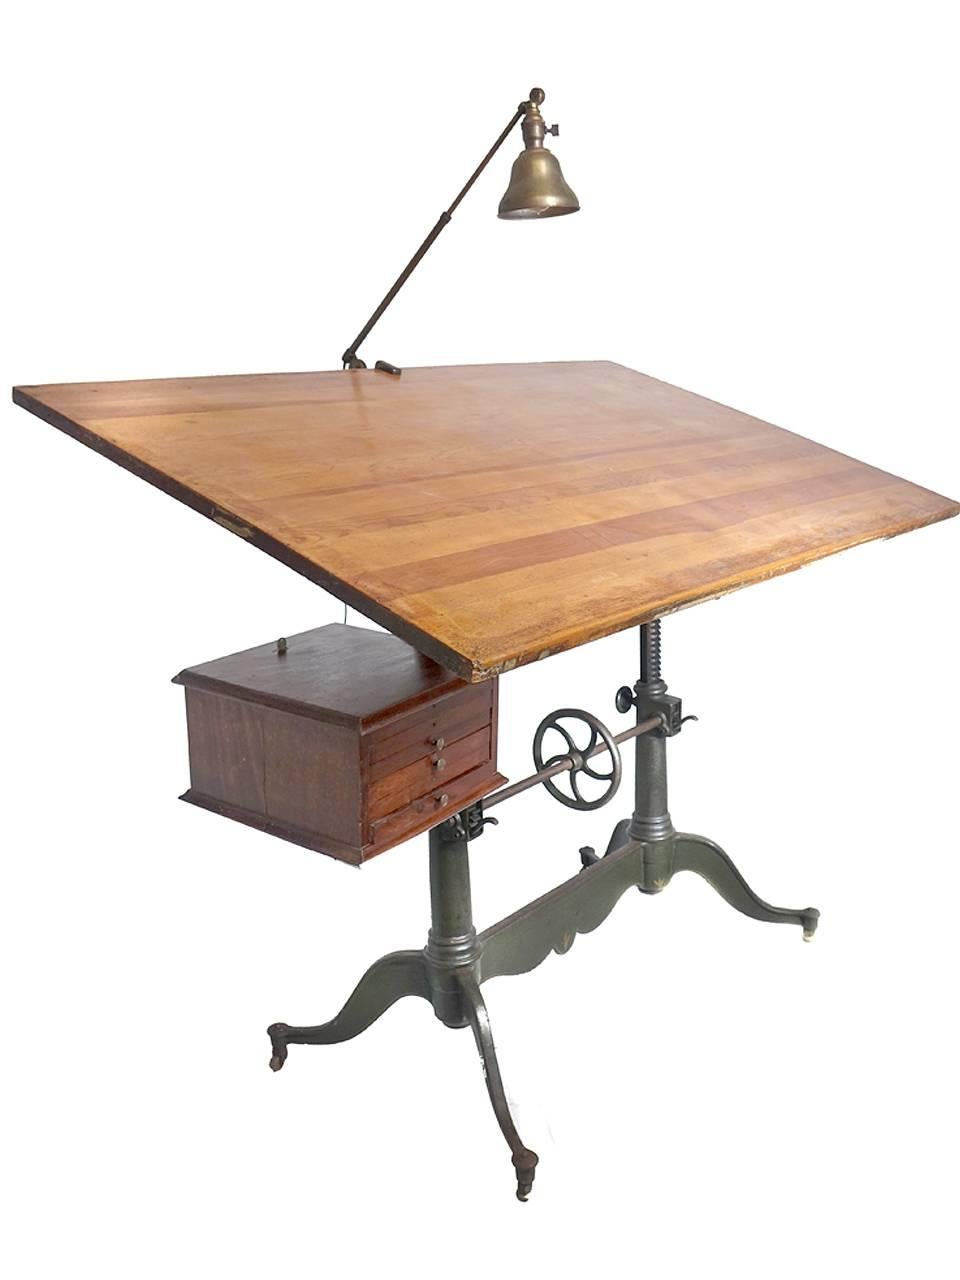 American Keuffel and Esser Double Pedestal Cast Iron Art Table